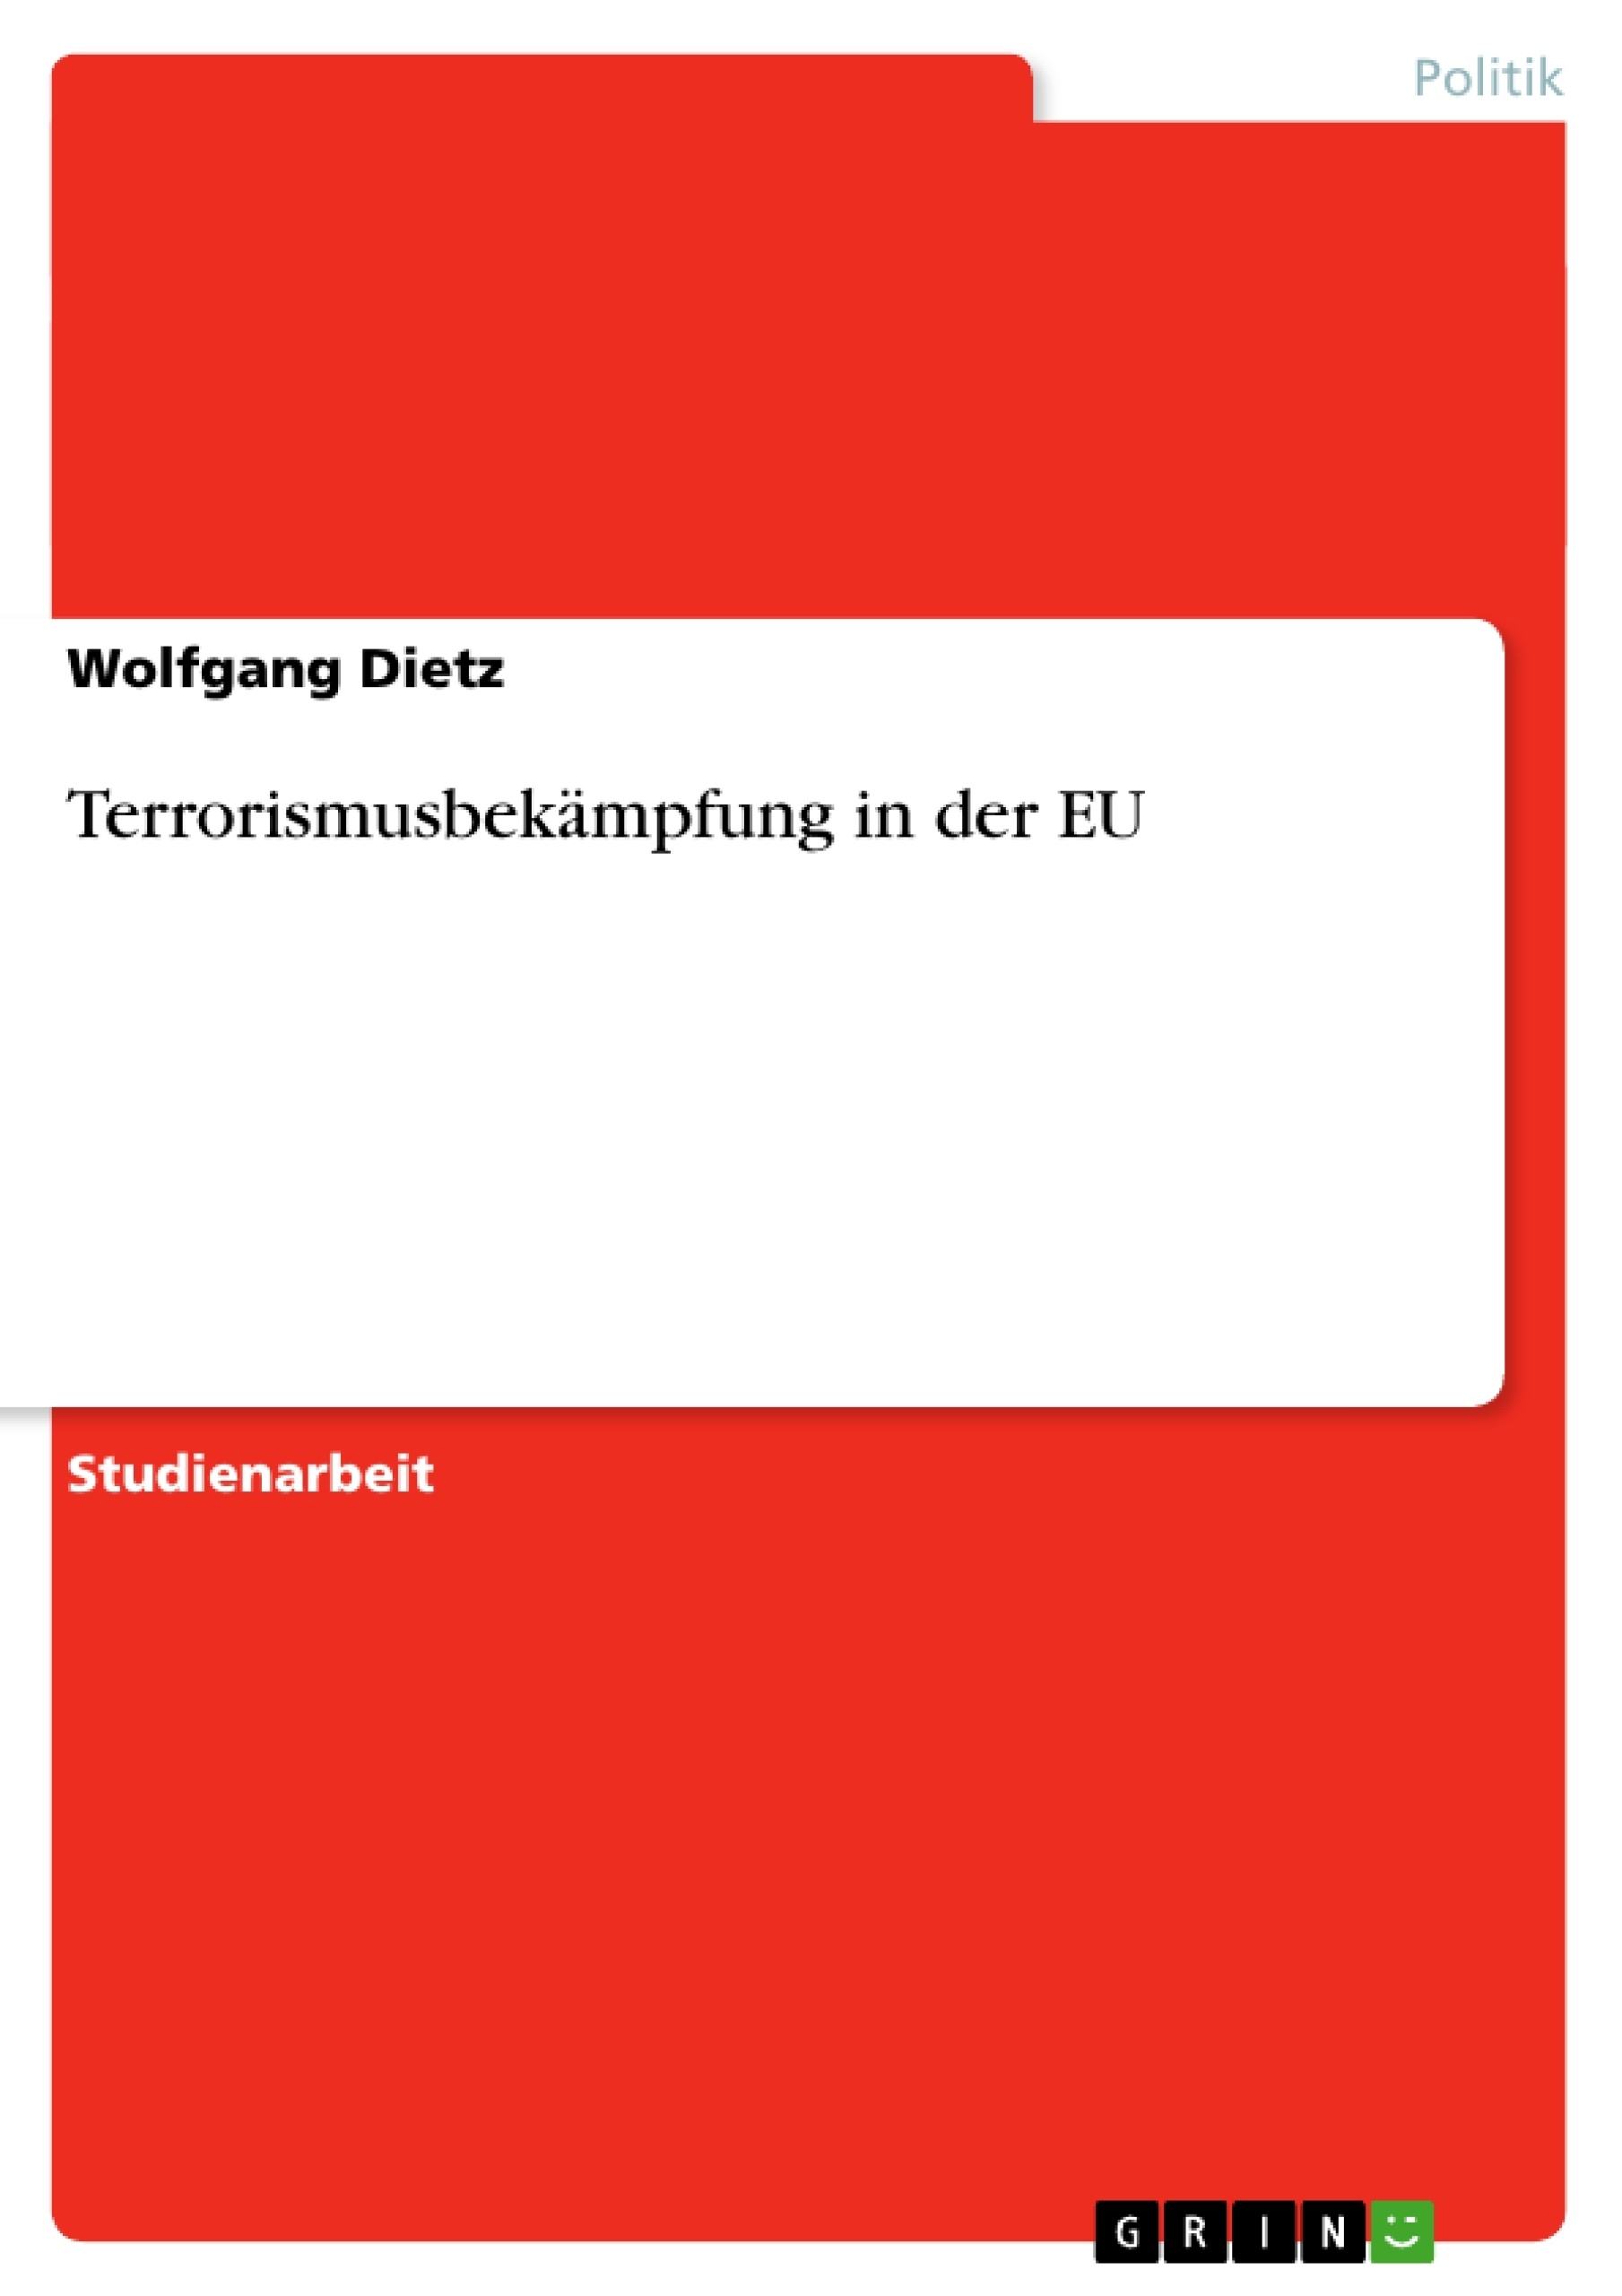 Título: Terrorismusbekämpfung in der EU